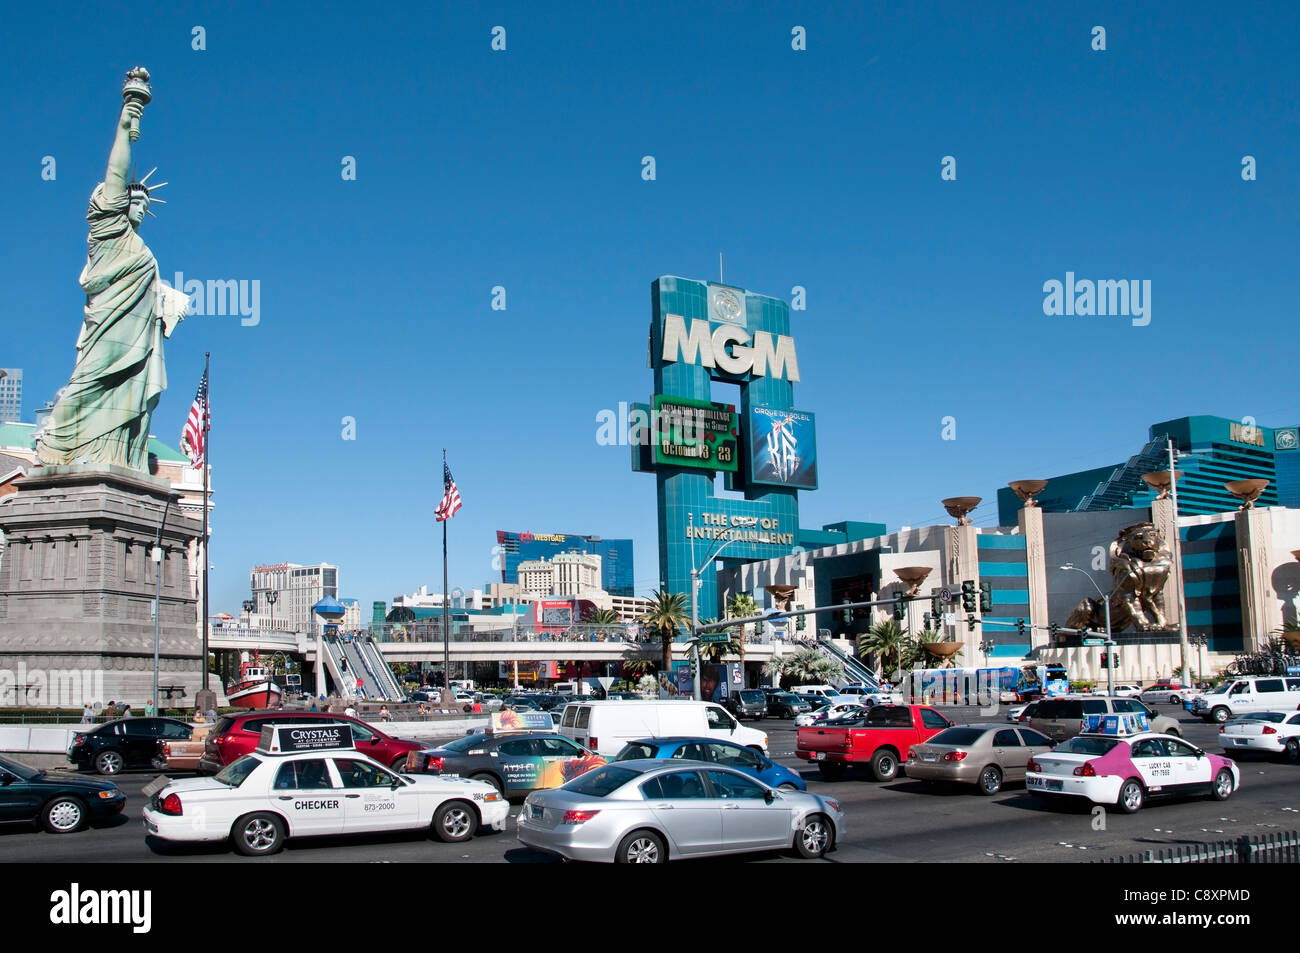 New York Casino Statue of Liberty Las Vegas Strip Glücksspiel Hauptstadt der Welt-USA-Nevada Stockfoto